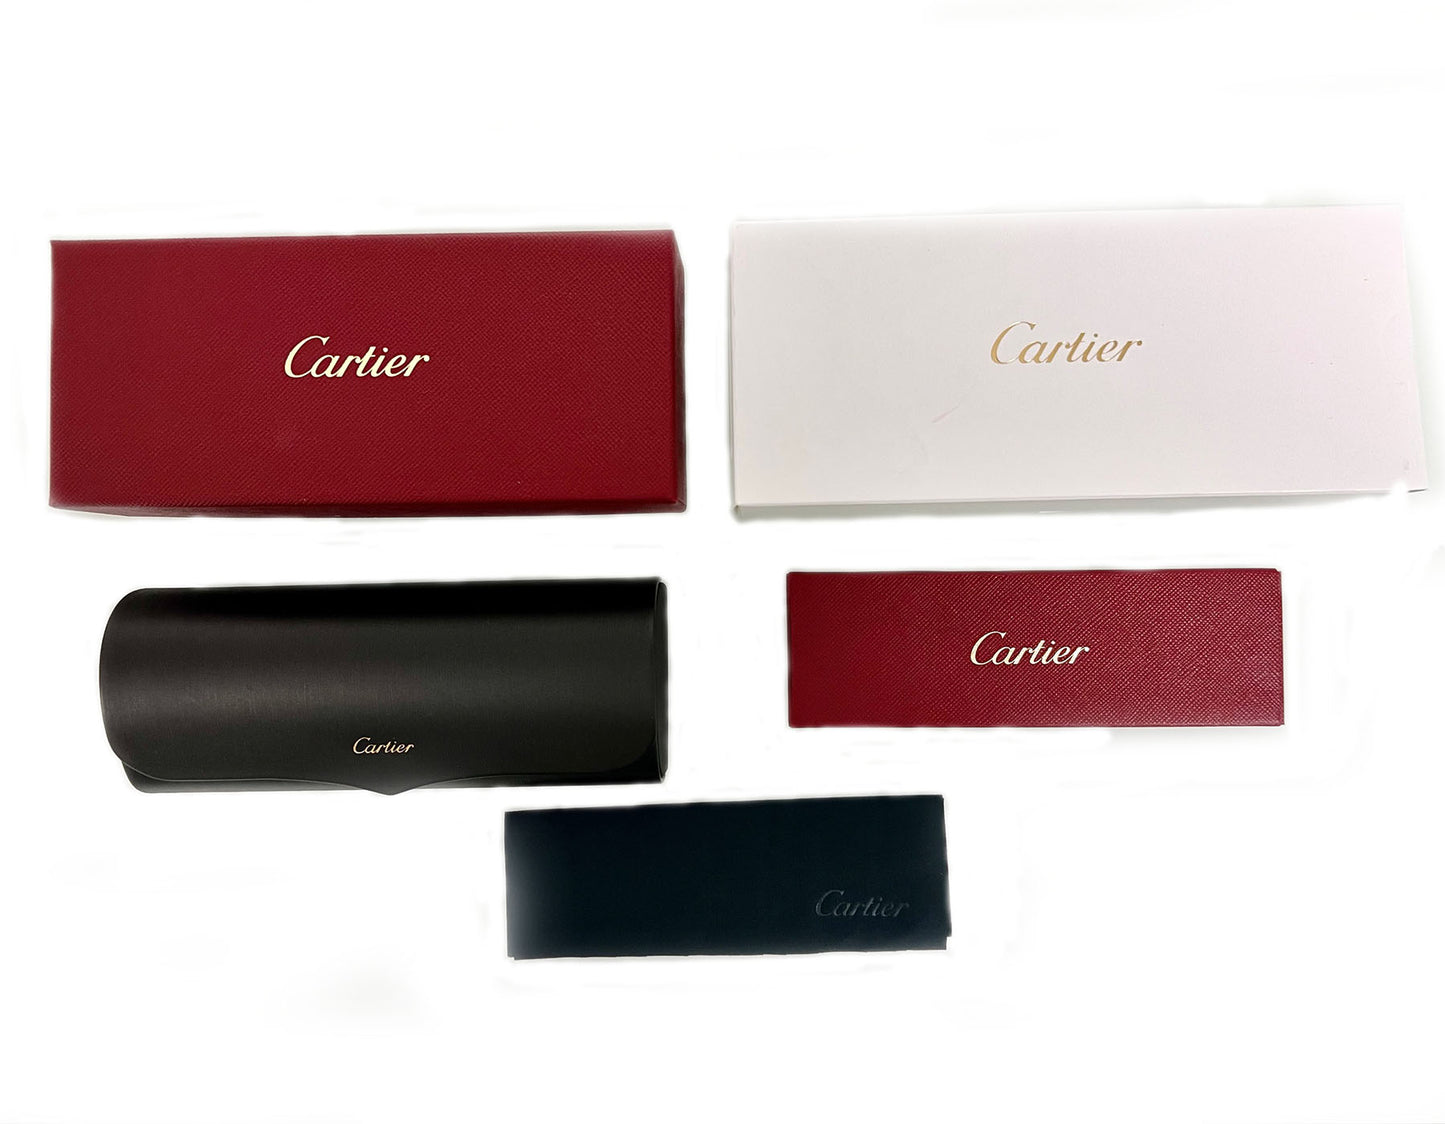 Cartier CT0361S-001 61mm New Sunglasses